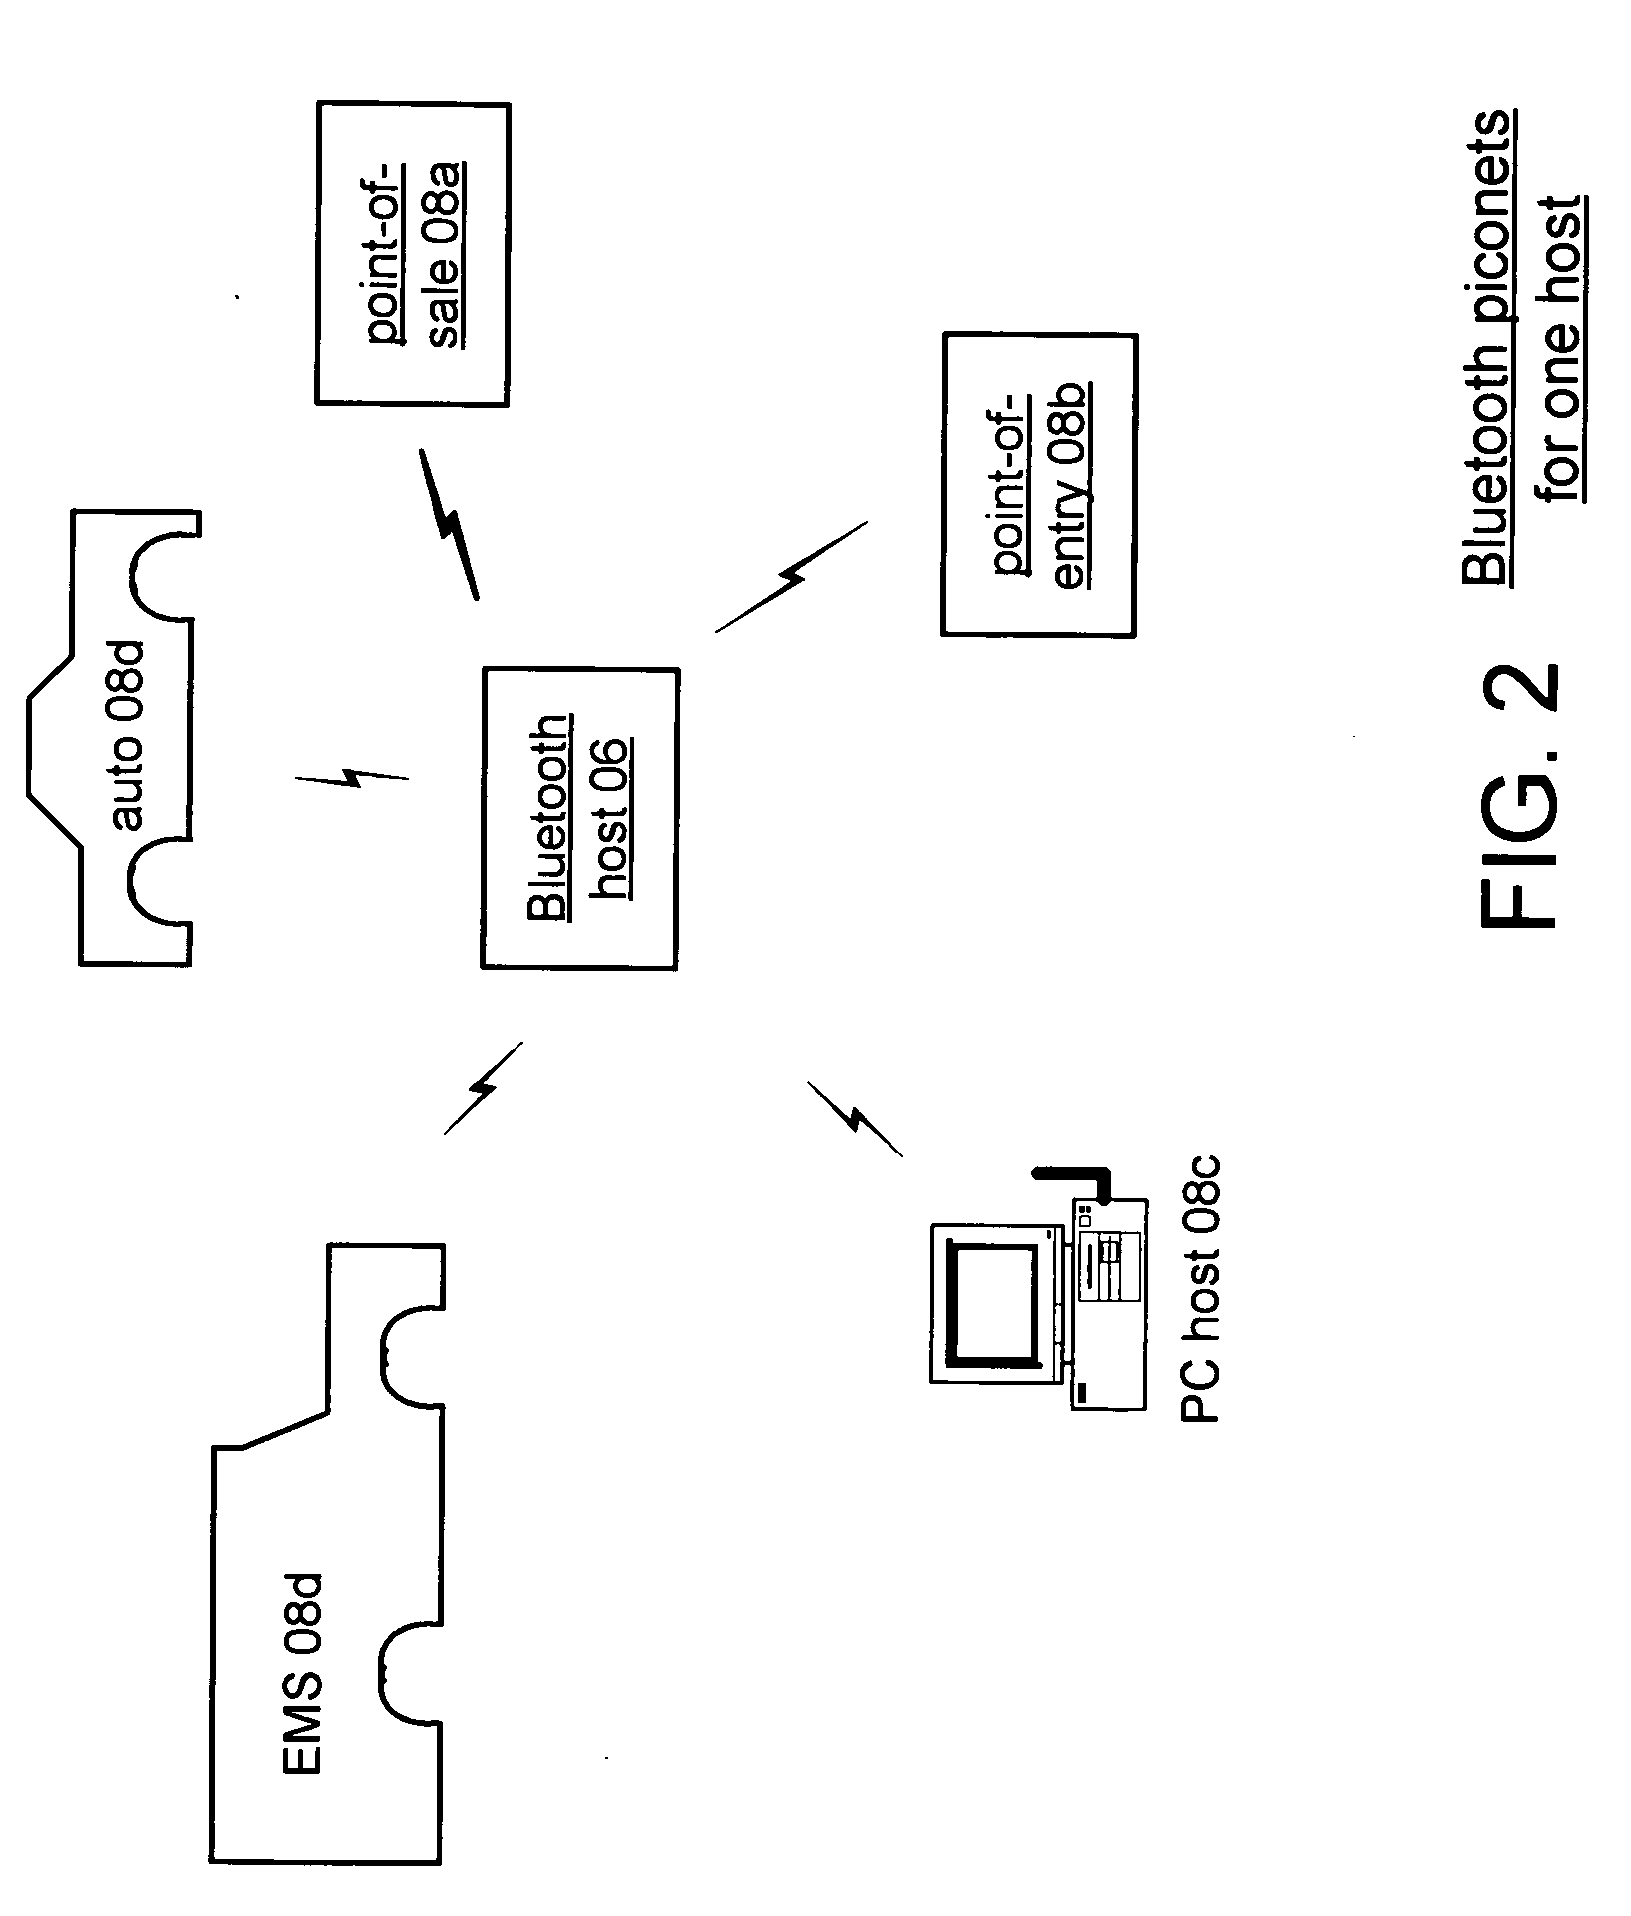 Method for identification using bluetooth wireless key